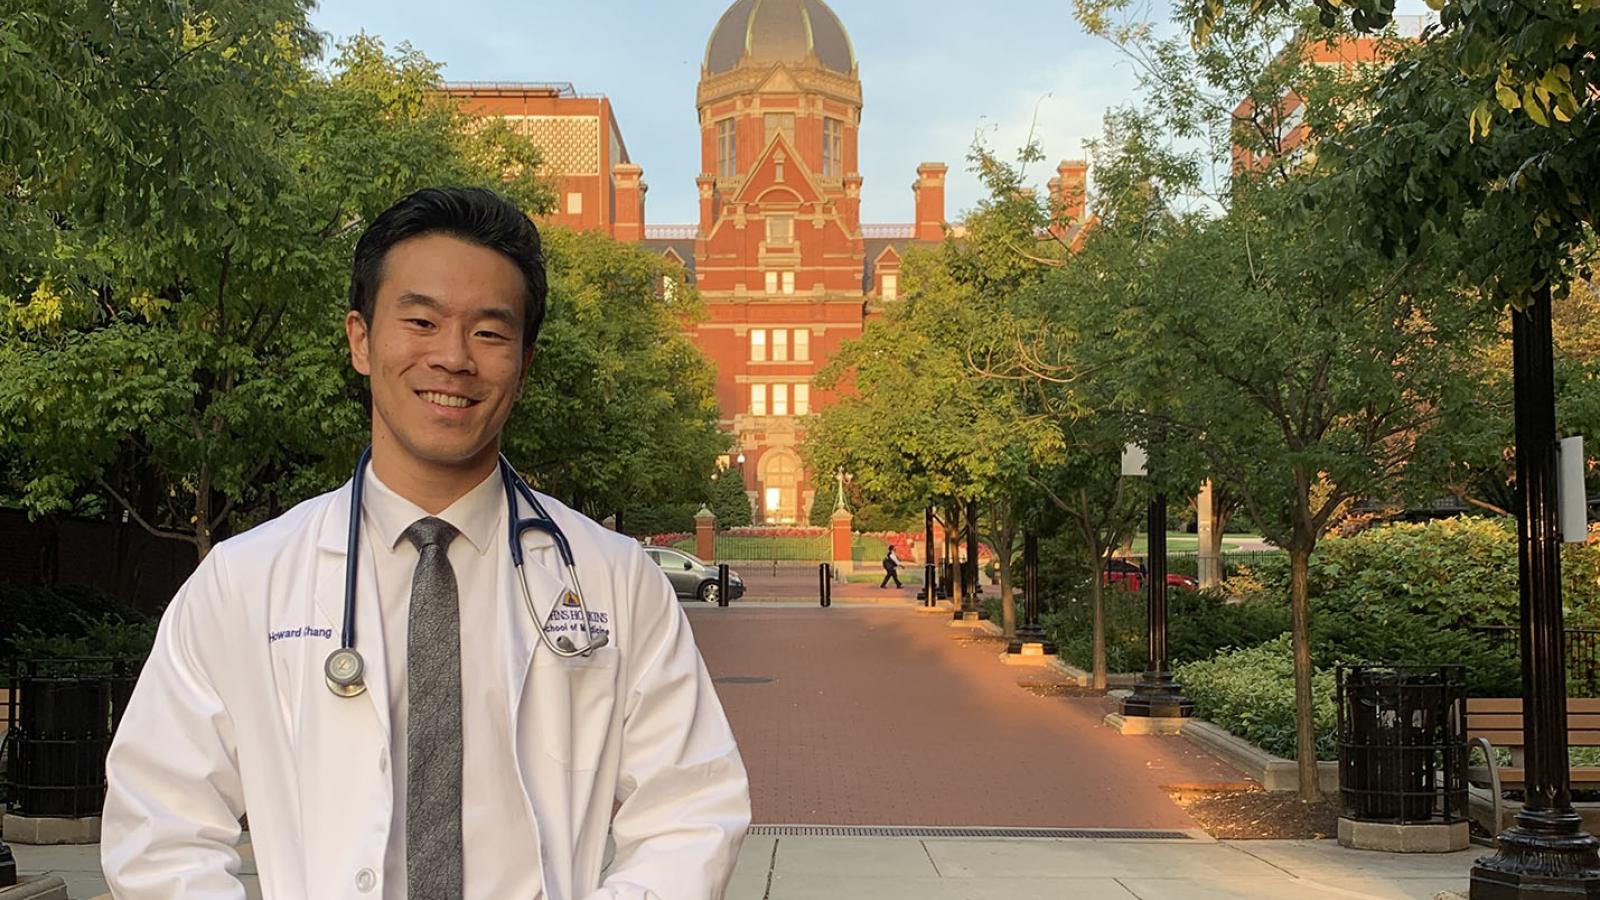 Howard Chang '14 in medical white coat at Johns Hopkins University